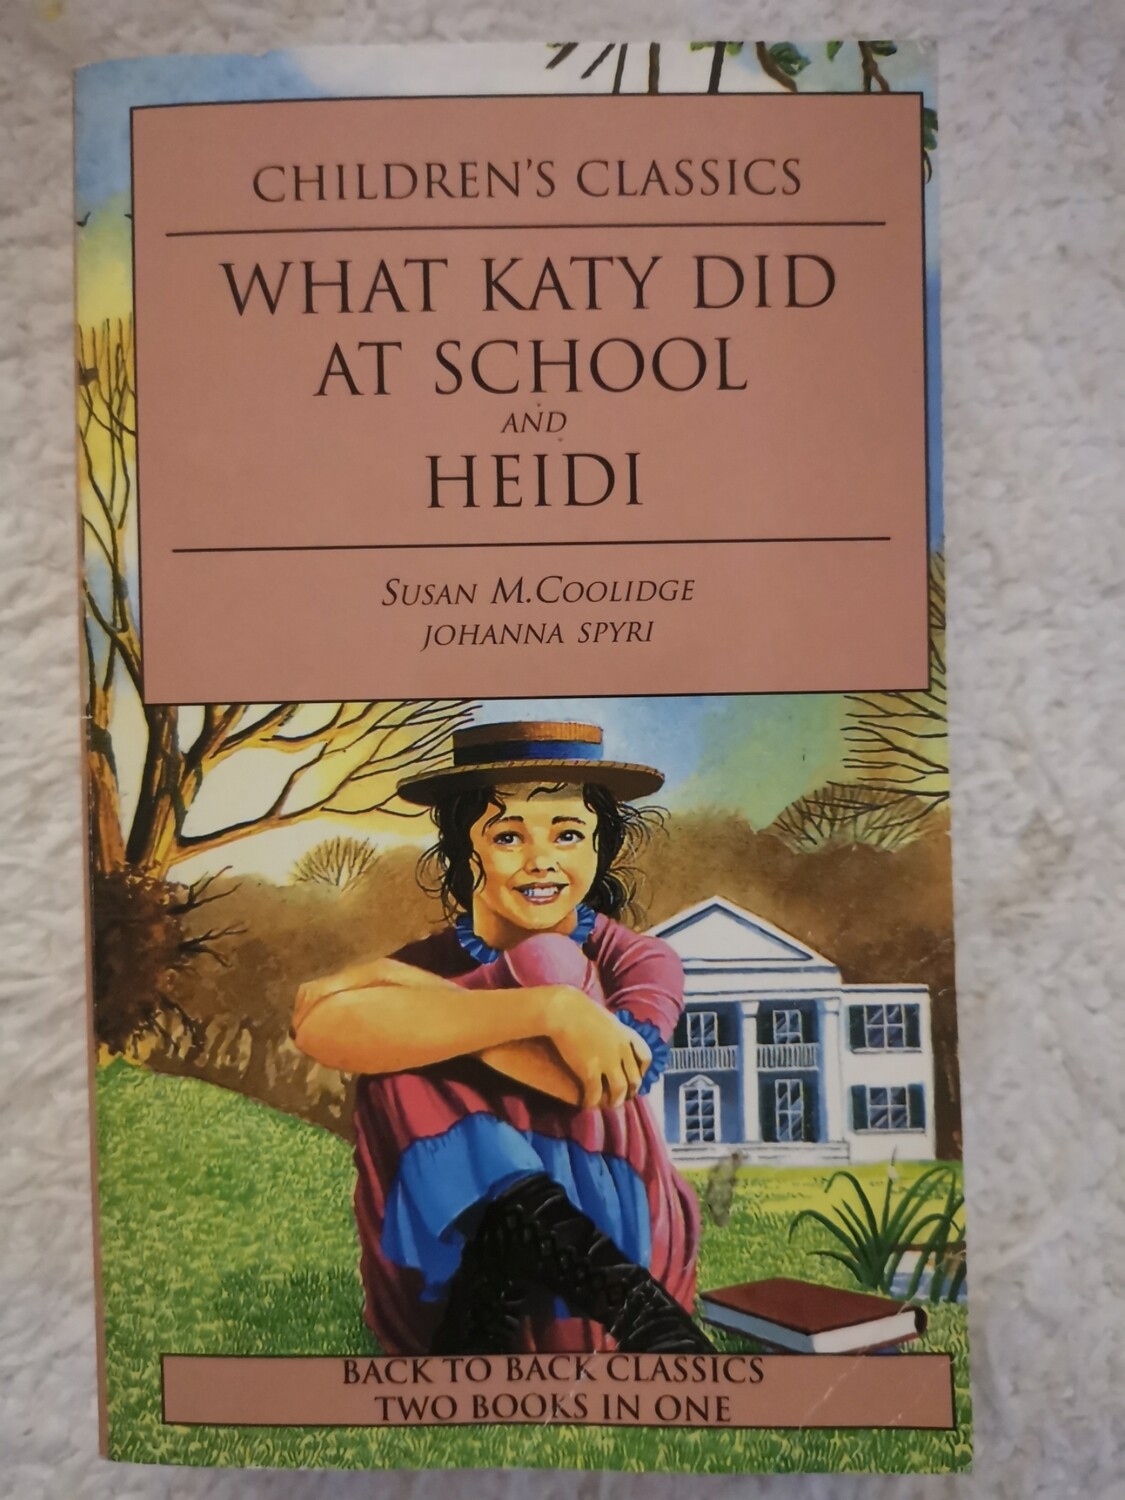 What Katy did at school & Heidi